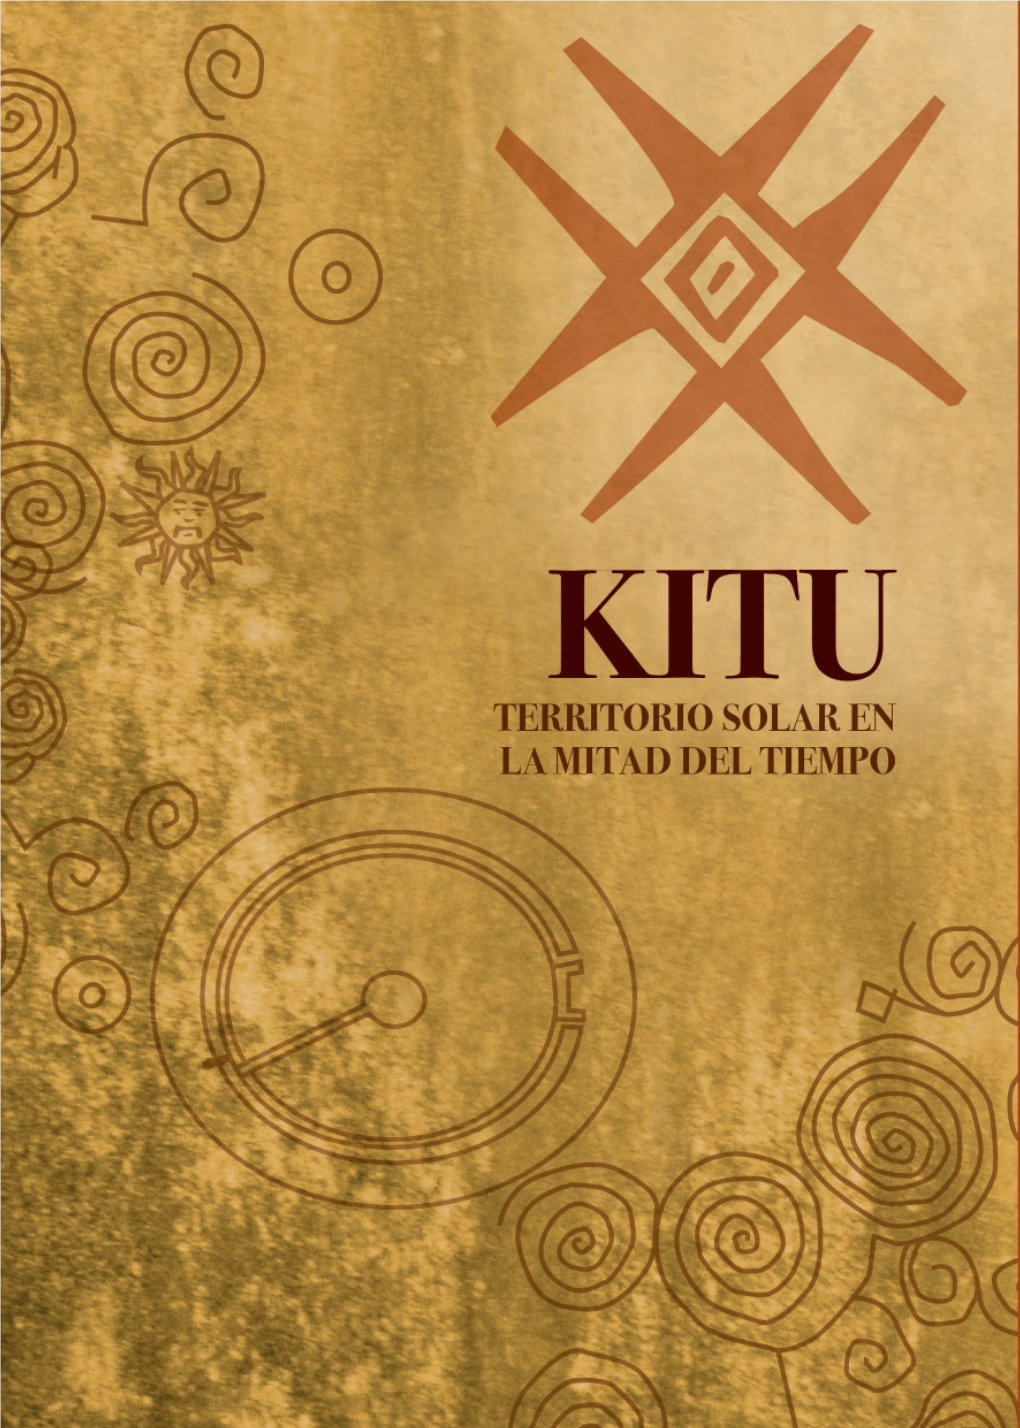 Libro Kitu Territorio Solar En La Mitad Del Tiempo.Pdf